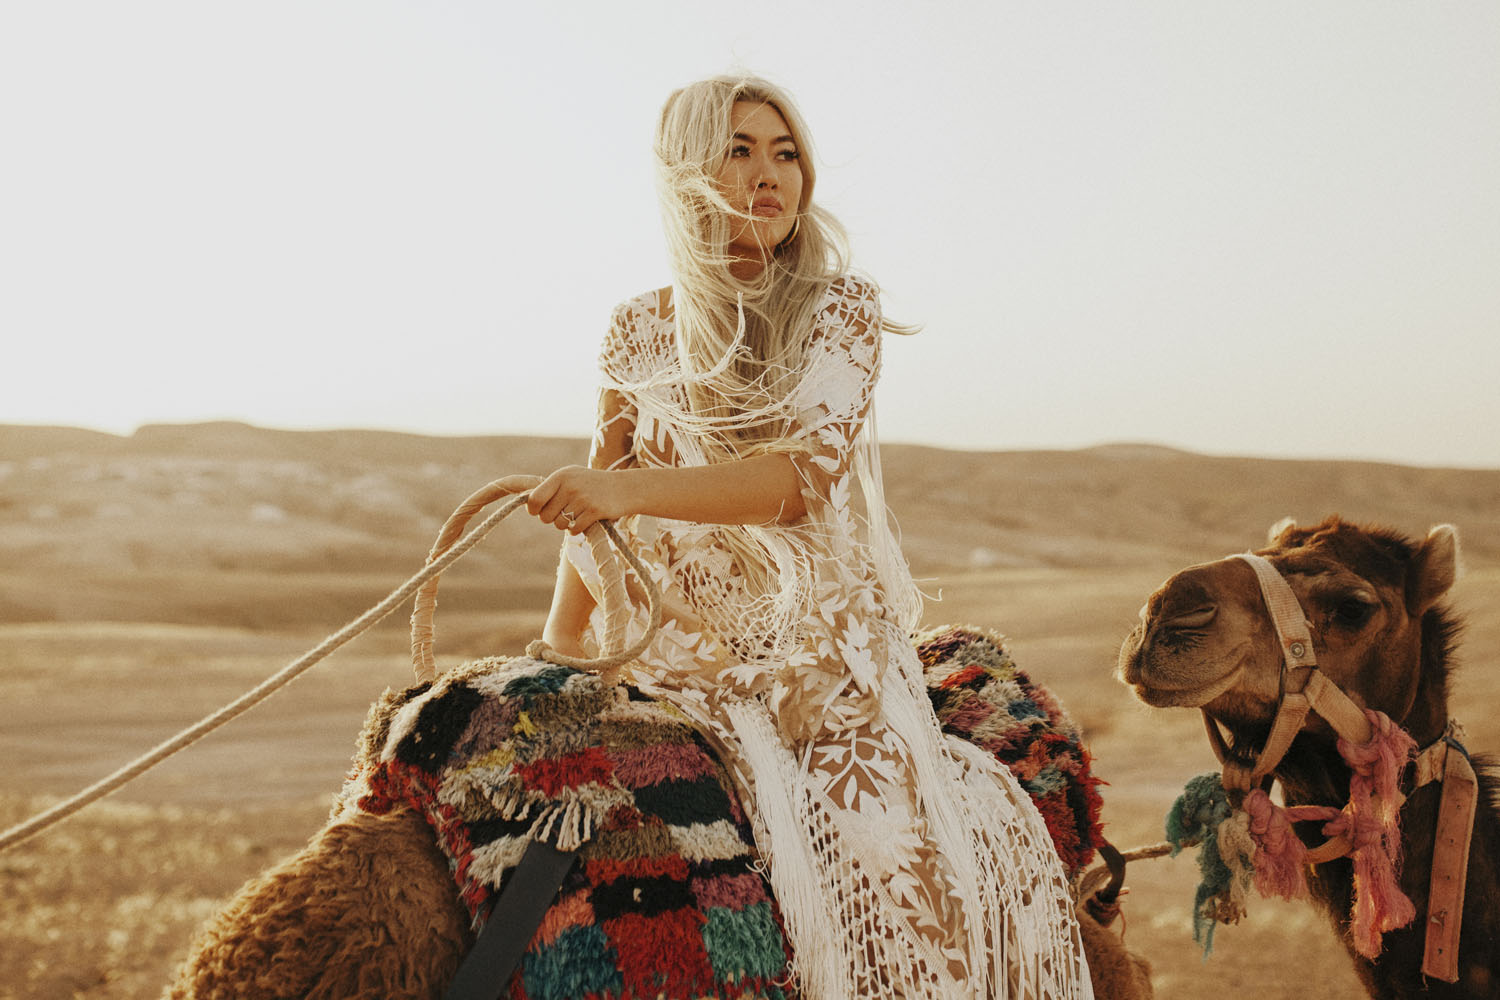 Intimate Moroccan Wedding